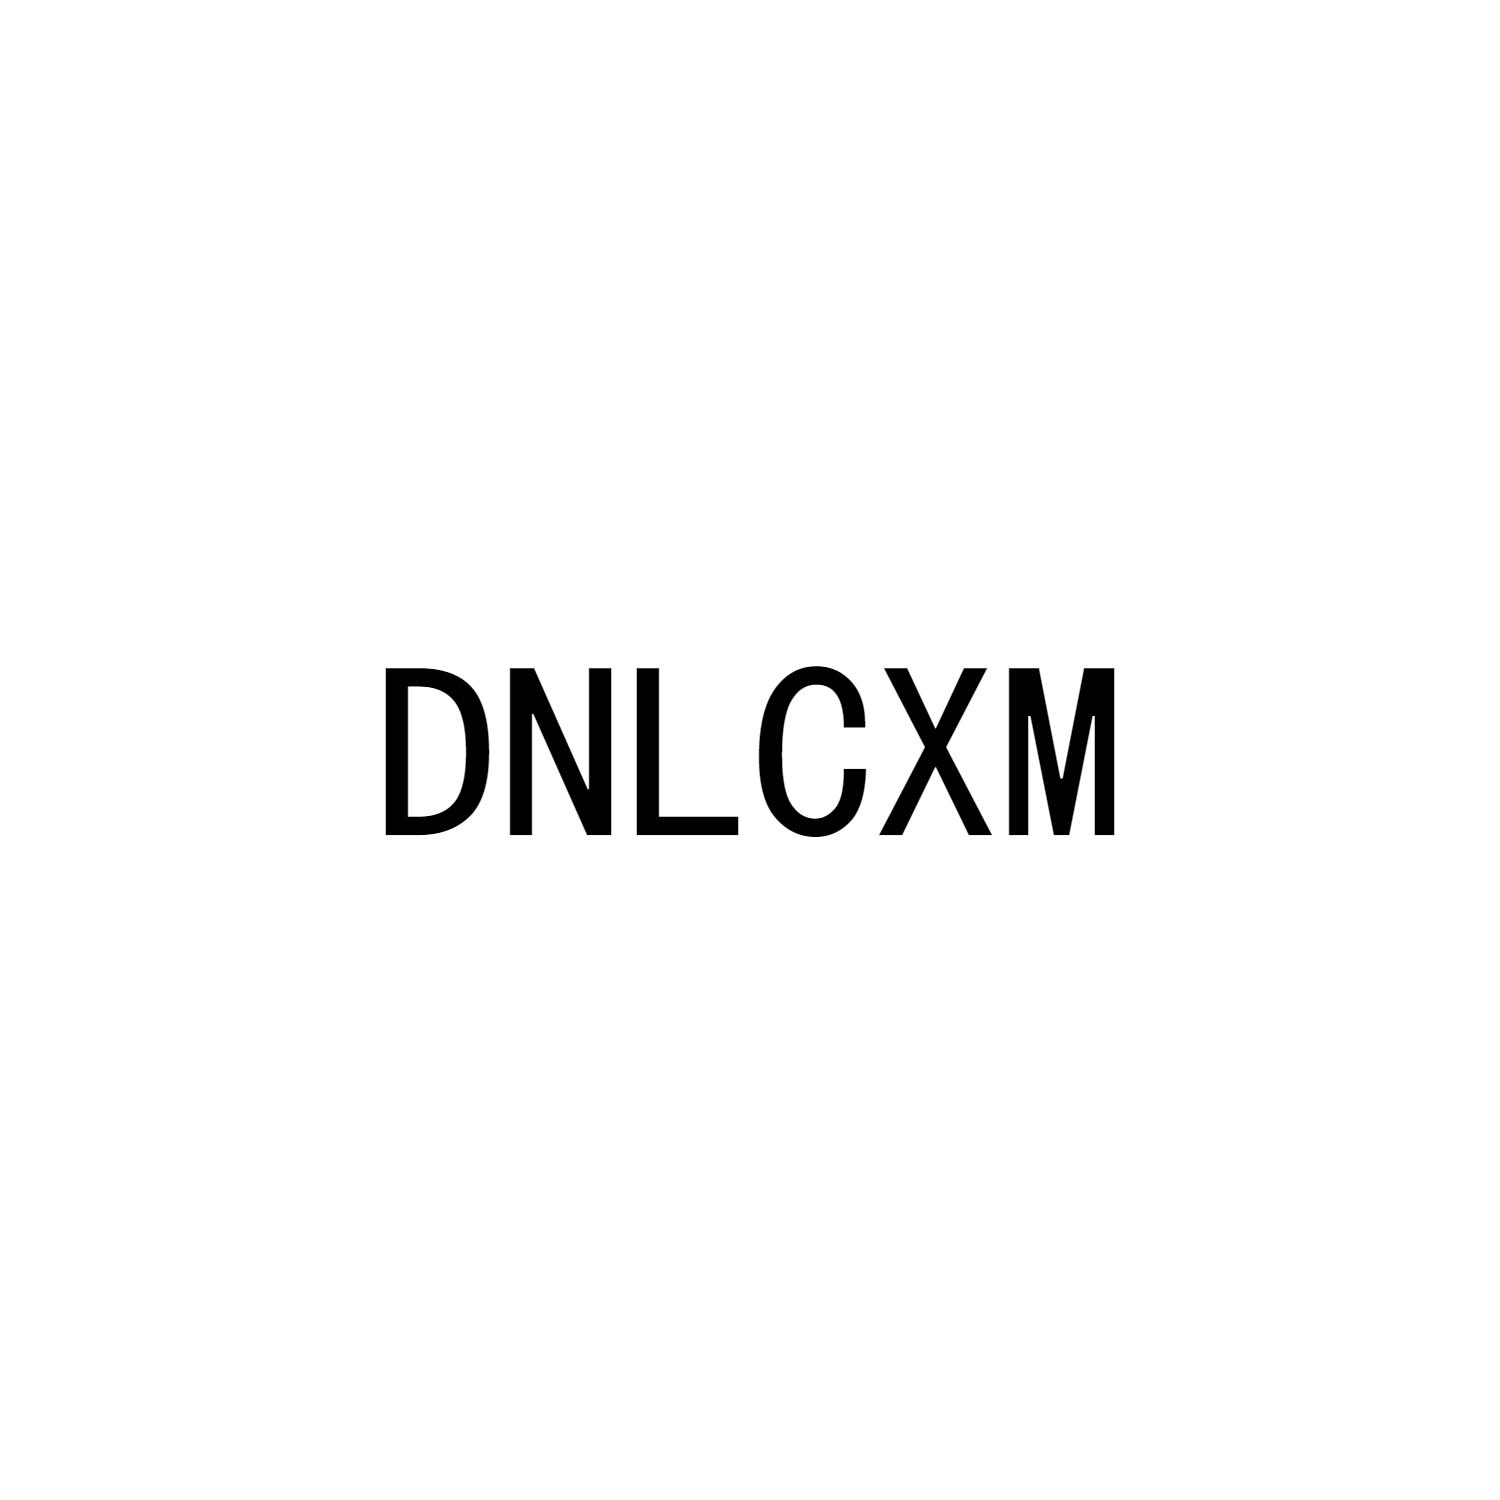 DNLCXM